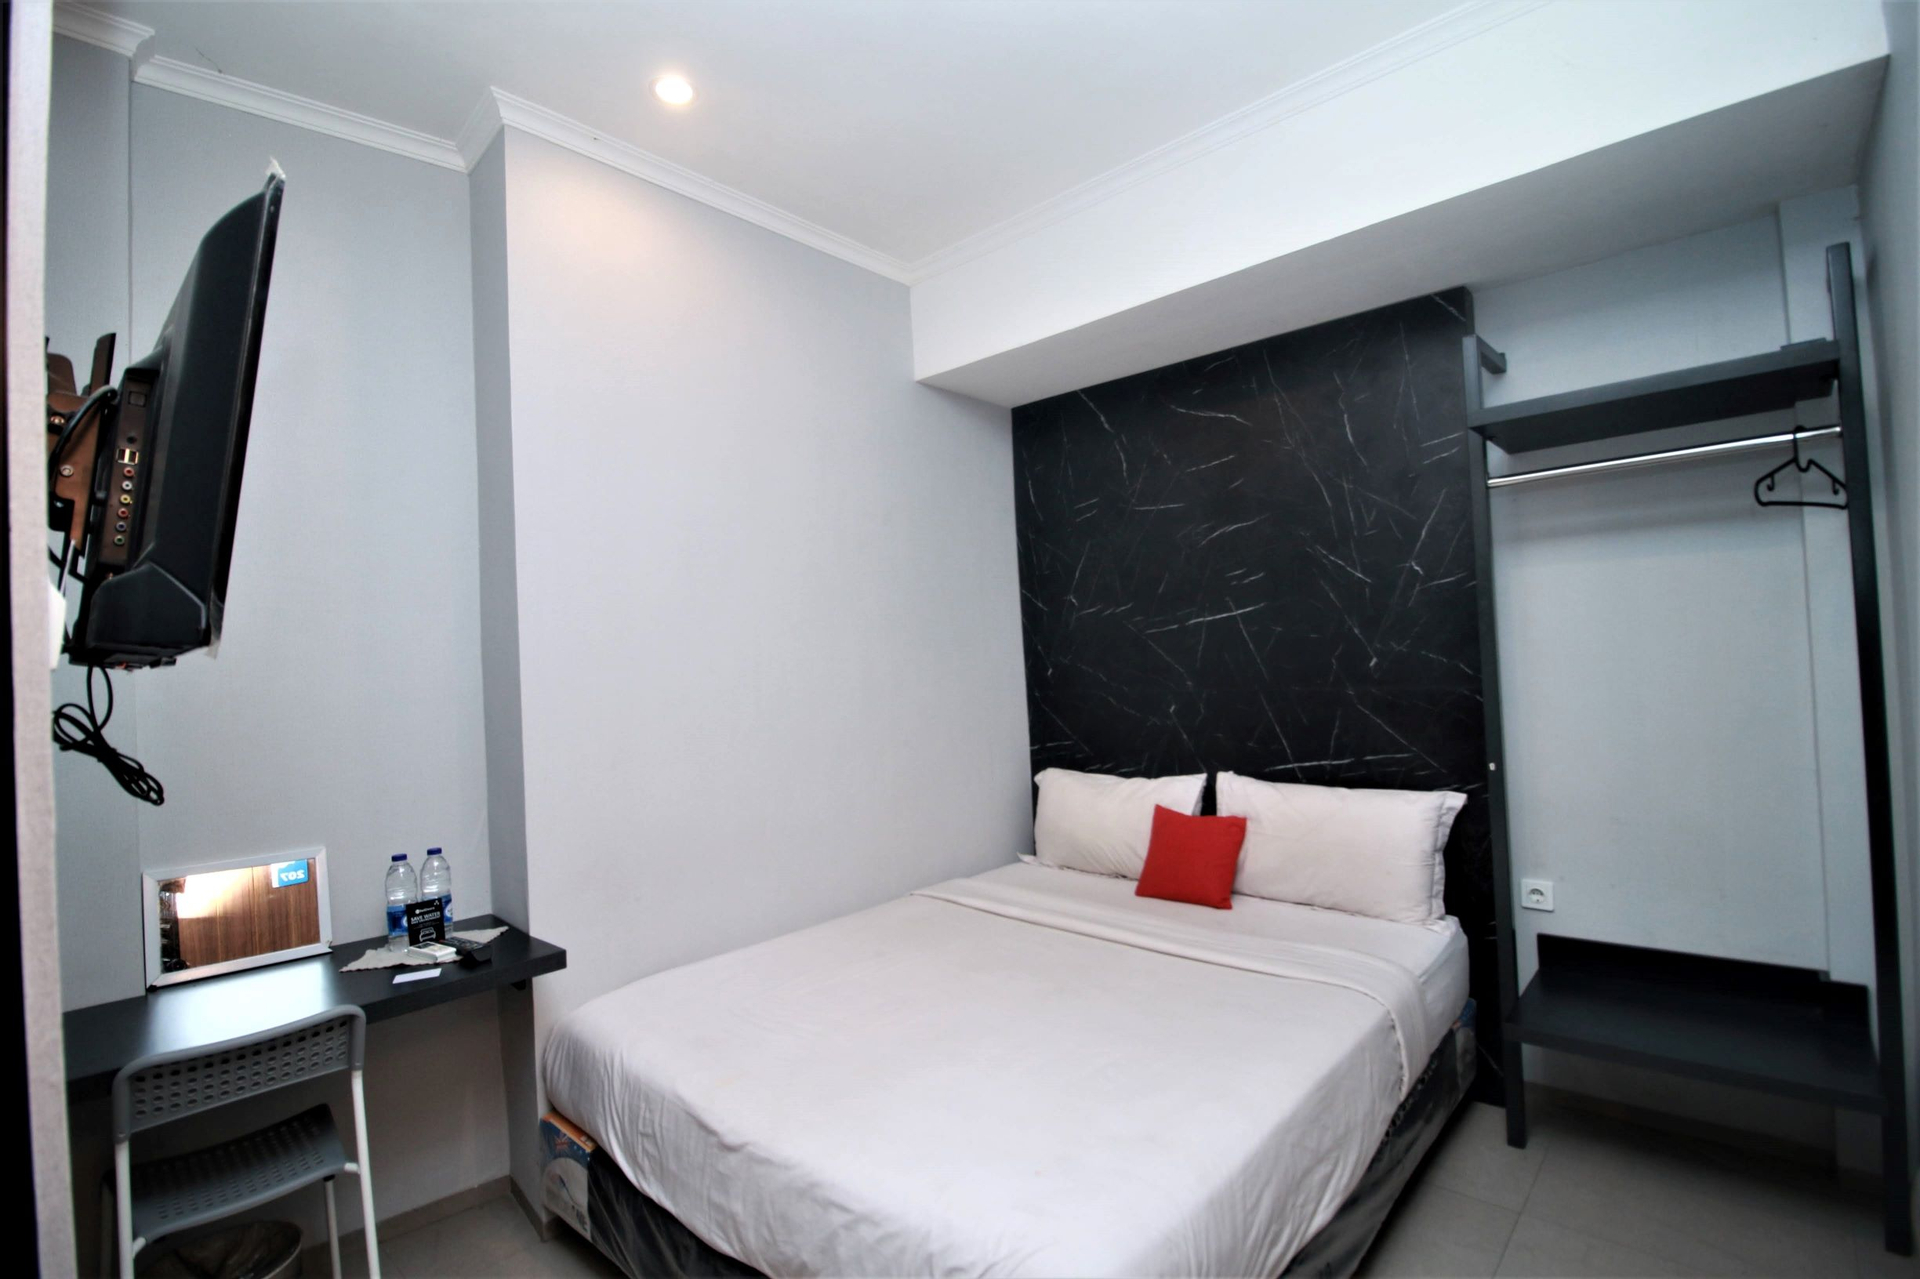 Bedroom 2, Bale Resident Jakarta, Jakarta Selatan